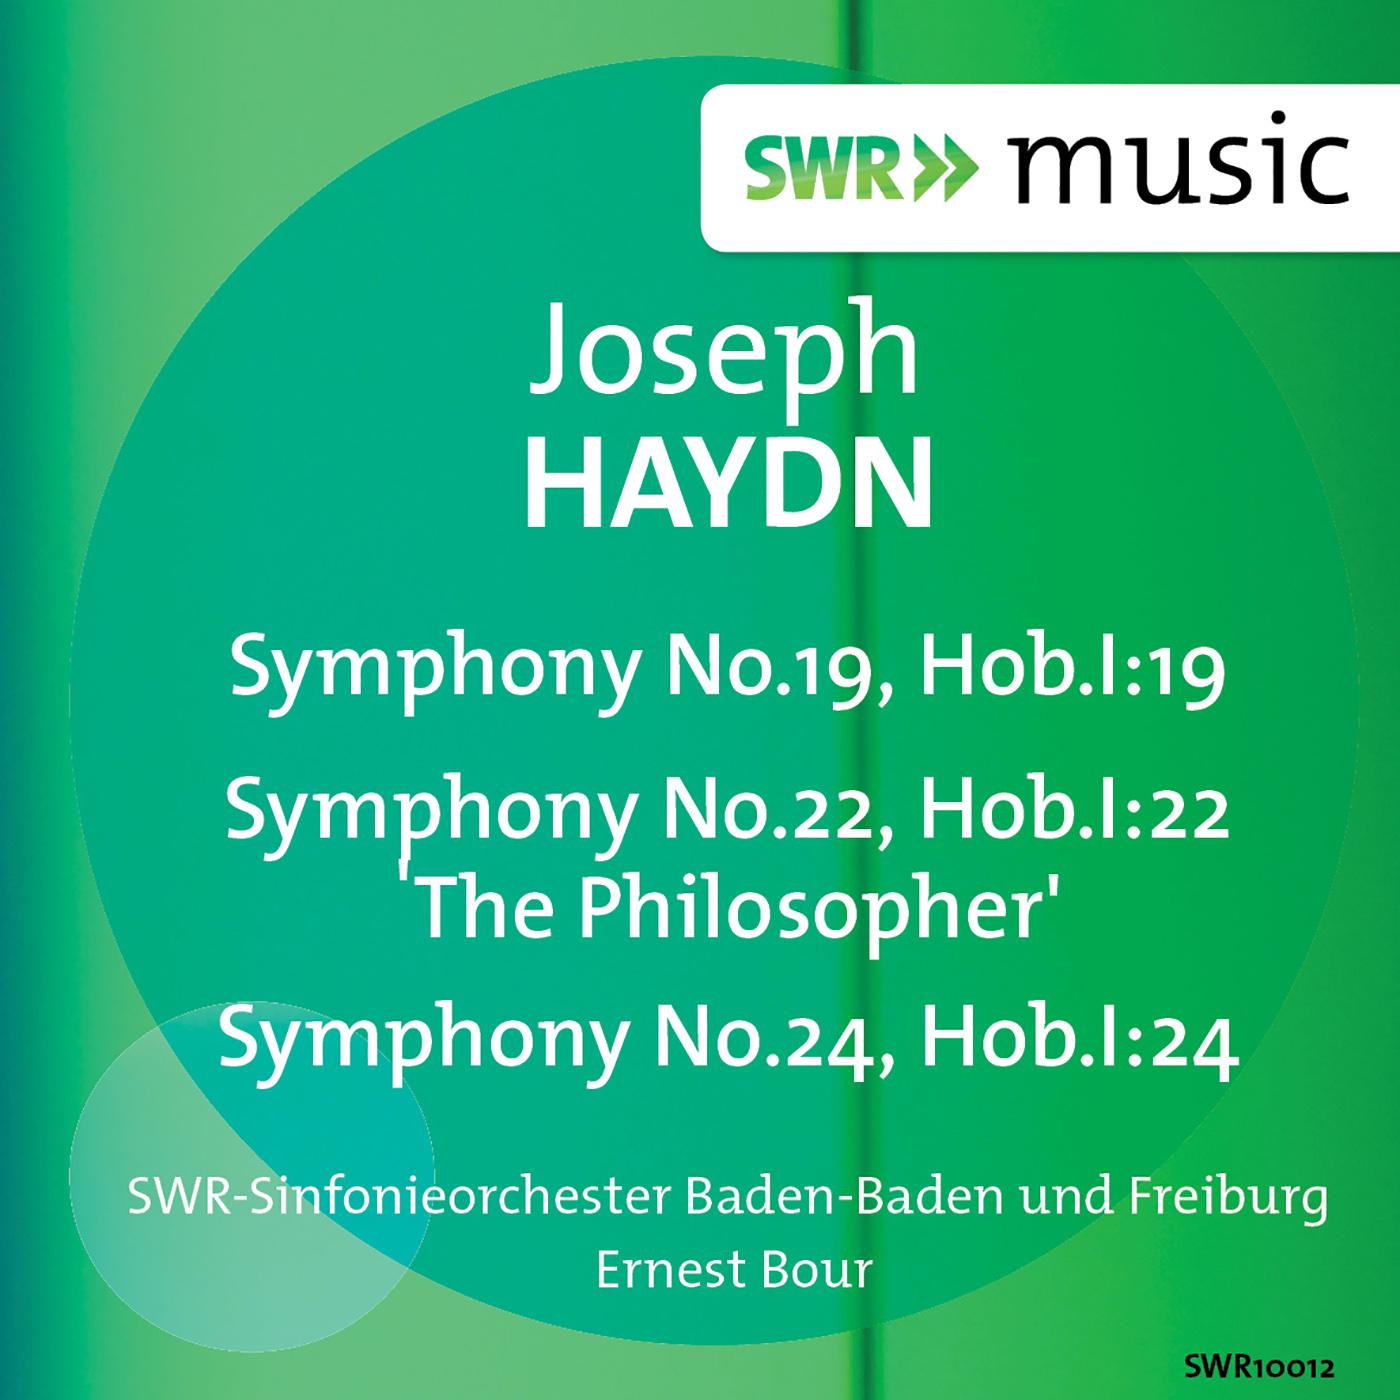 SWR Sinfonieorchester Baden-Baden und Freiburg - Symphony No. 24 in D Major, Hob.I:24:III. Menuet - Trio